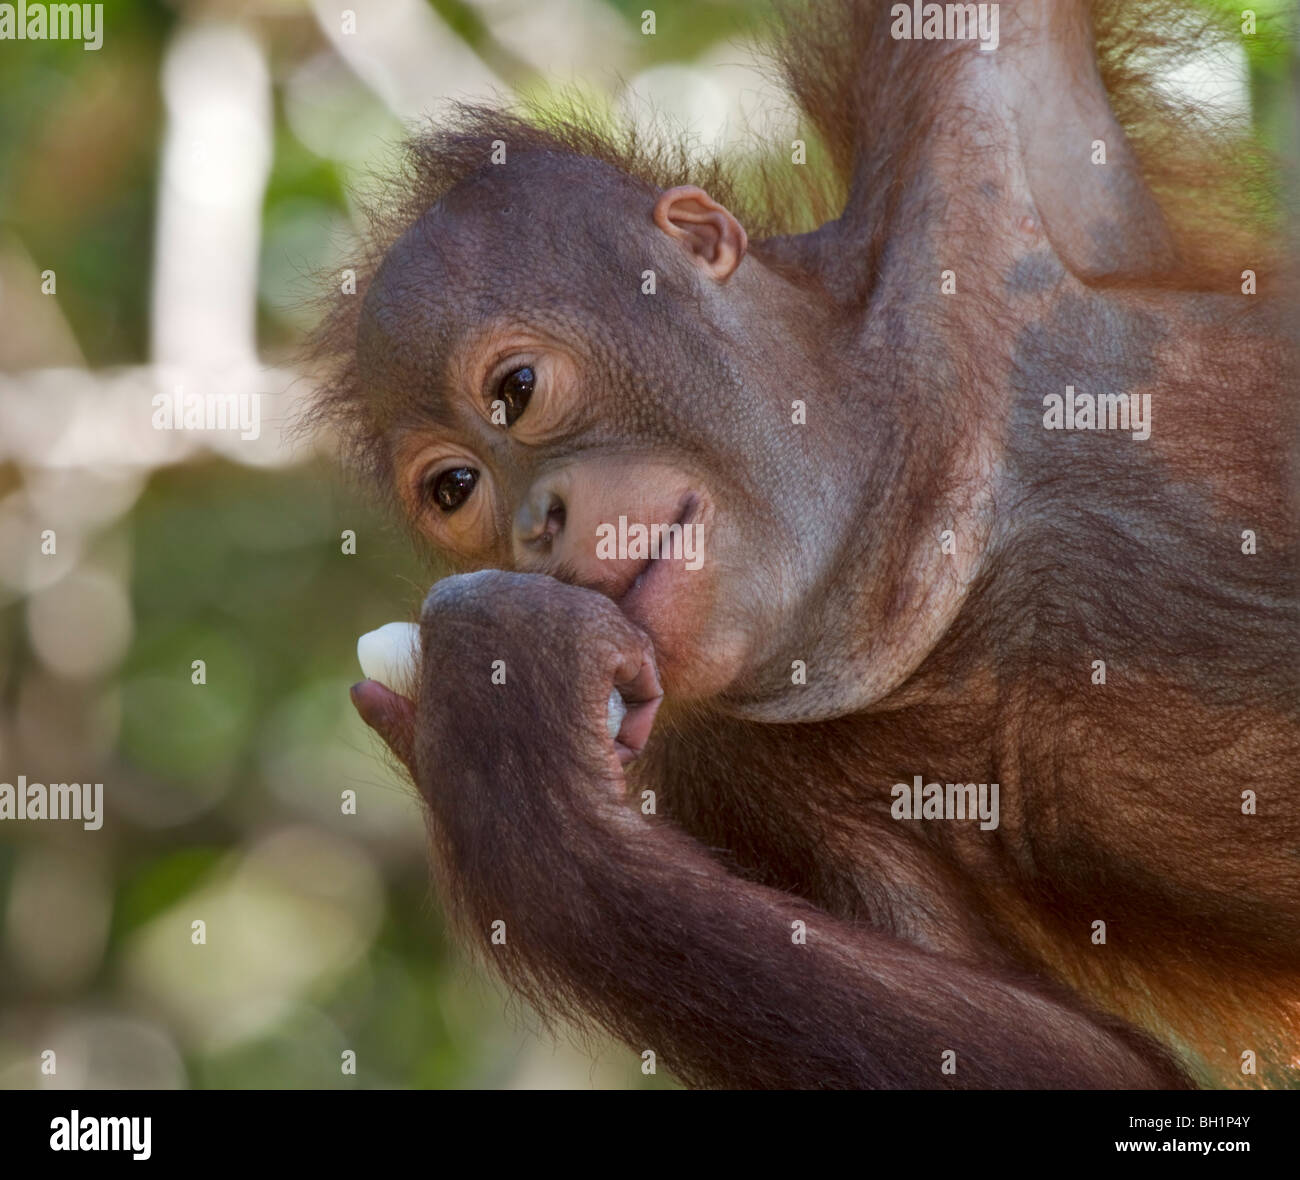 Orangután huérfano sosteniendo un pedazo de fruta en la Reserva Natural de Ria Rasa, Kota Kinabalu, Sabah, Borneo malasio Foto de stock